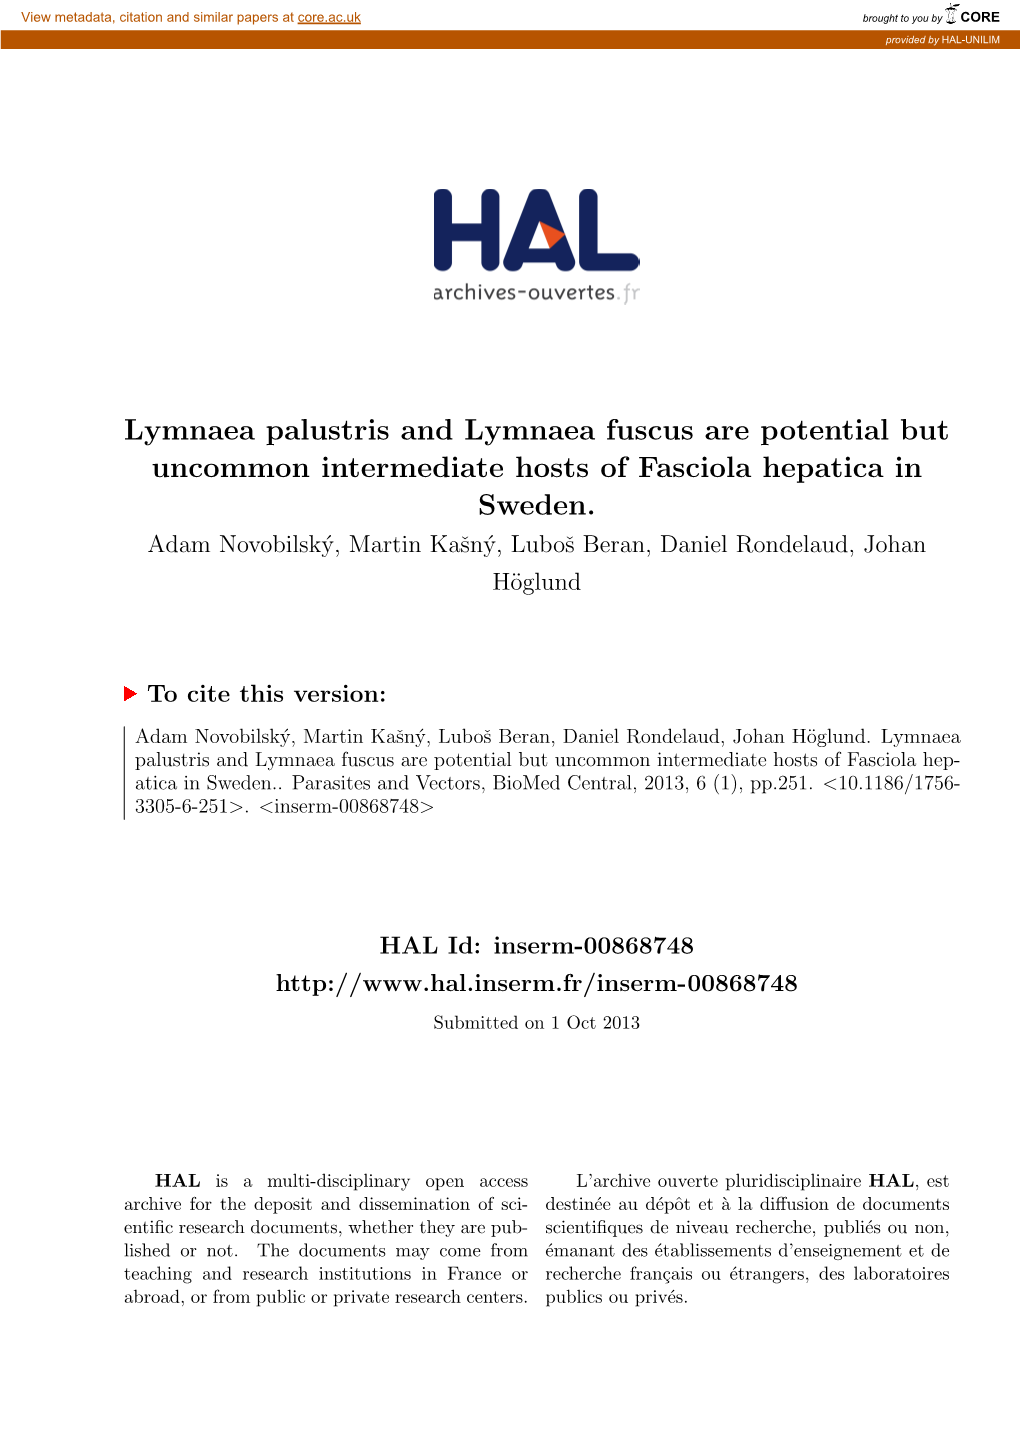 Lymnaea Palustris and Lymnaea Fuscus Are Potential but Uncommon Intermediate Hosts of Fasciola Hepatica in Sweden